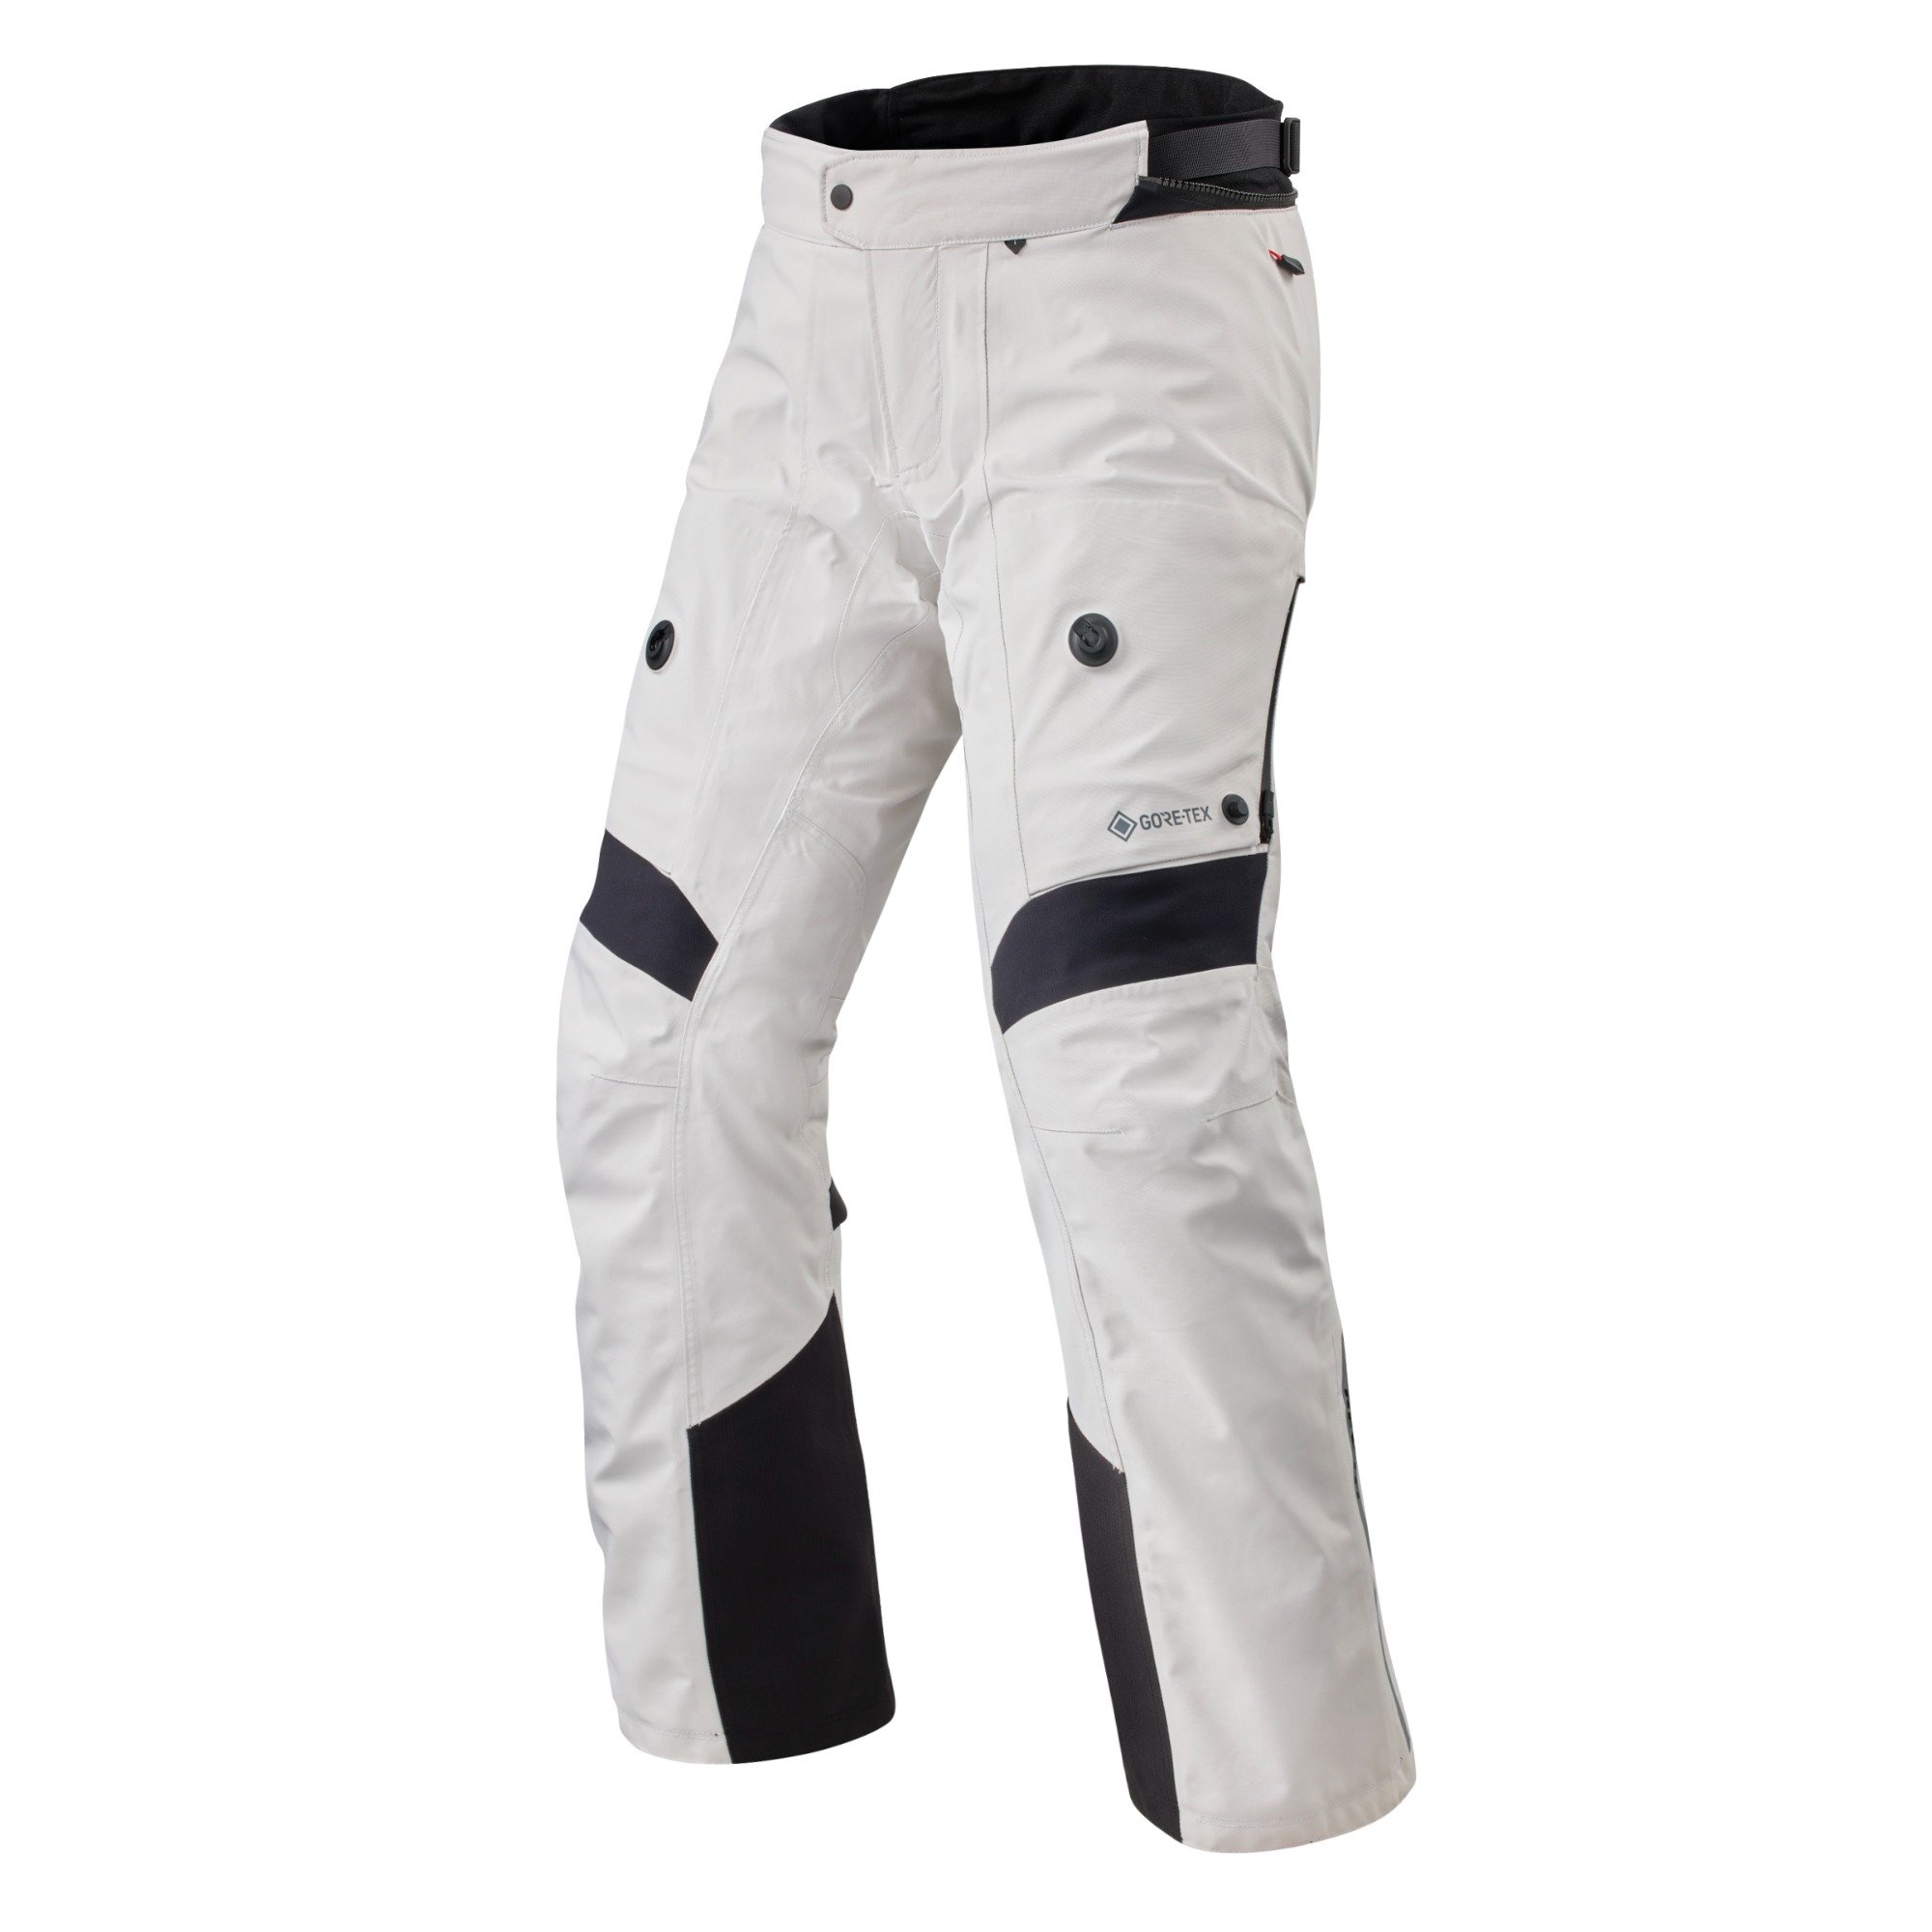 Image of REV'IT! Pants Poseidon 3 GTX Silver Black Standard Motorcycle Pants Size XL ID 8700001362610